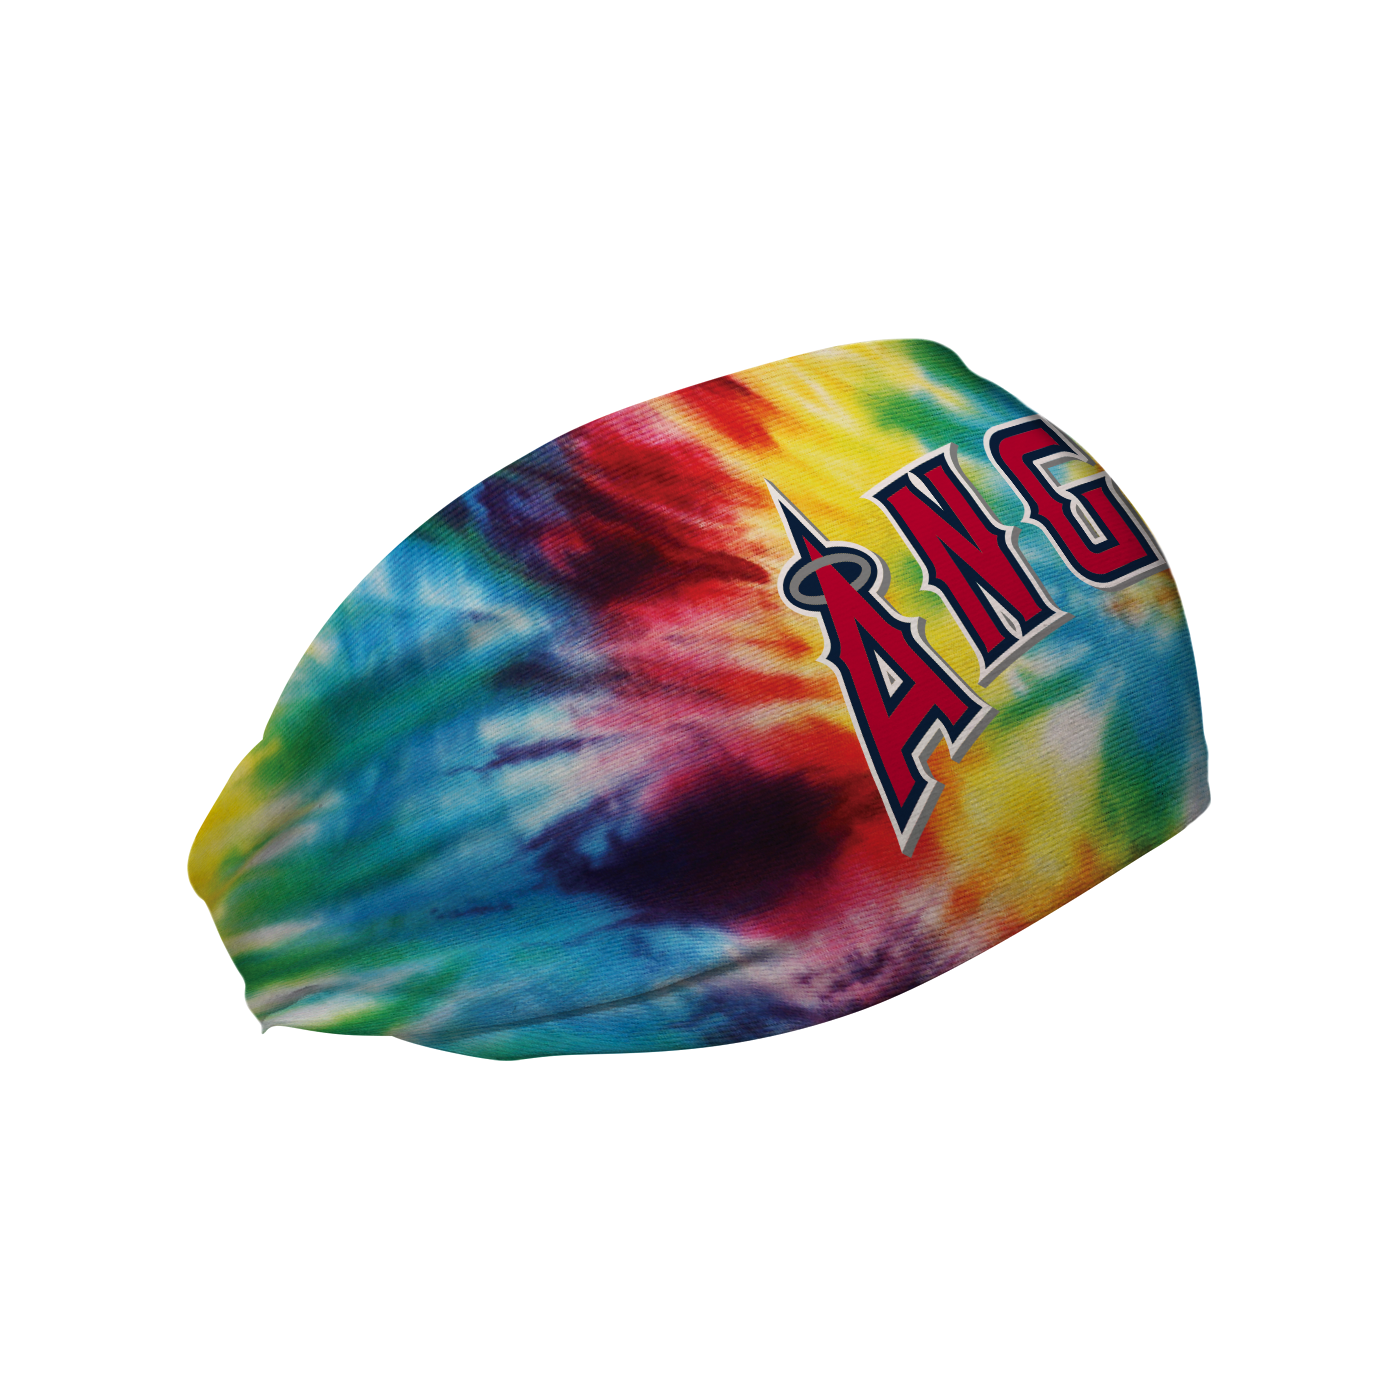 Los Angeles Angels V Tie-Dye T-Shirt